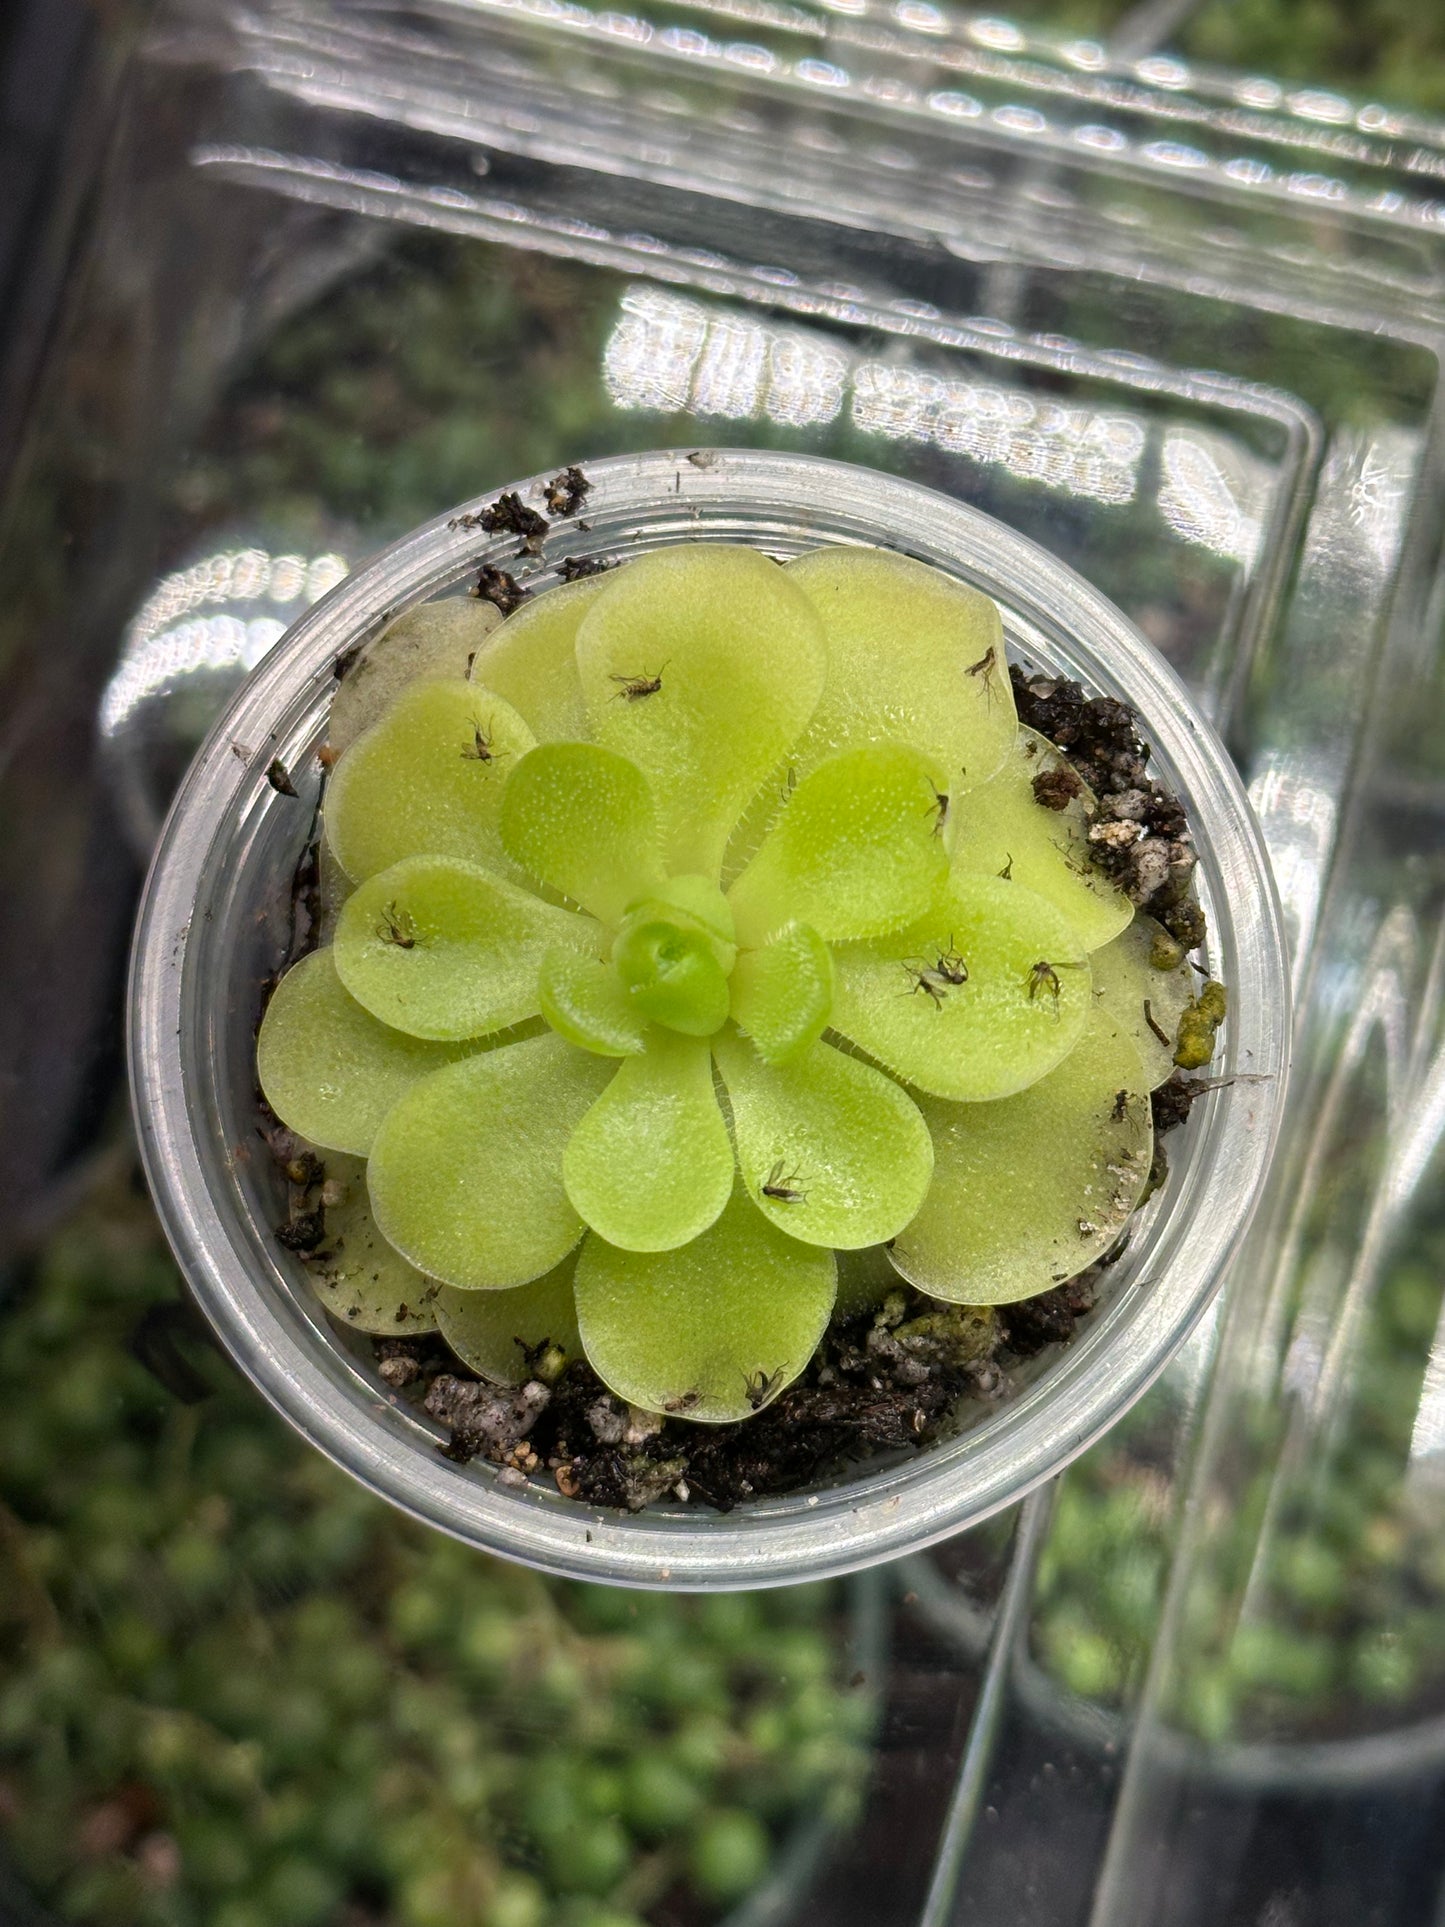 2” Pinguicula moranensis “Butterwort”